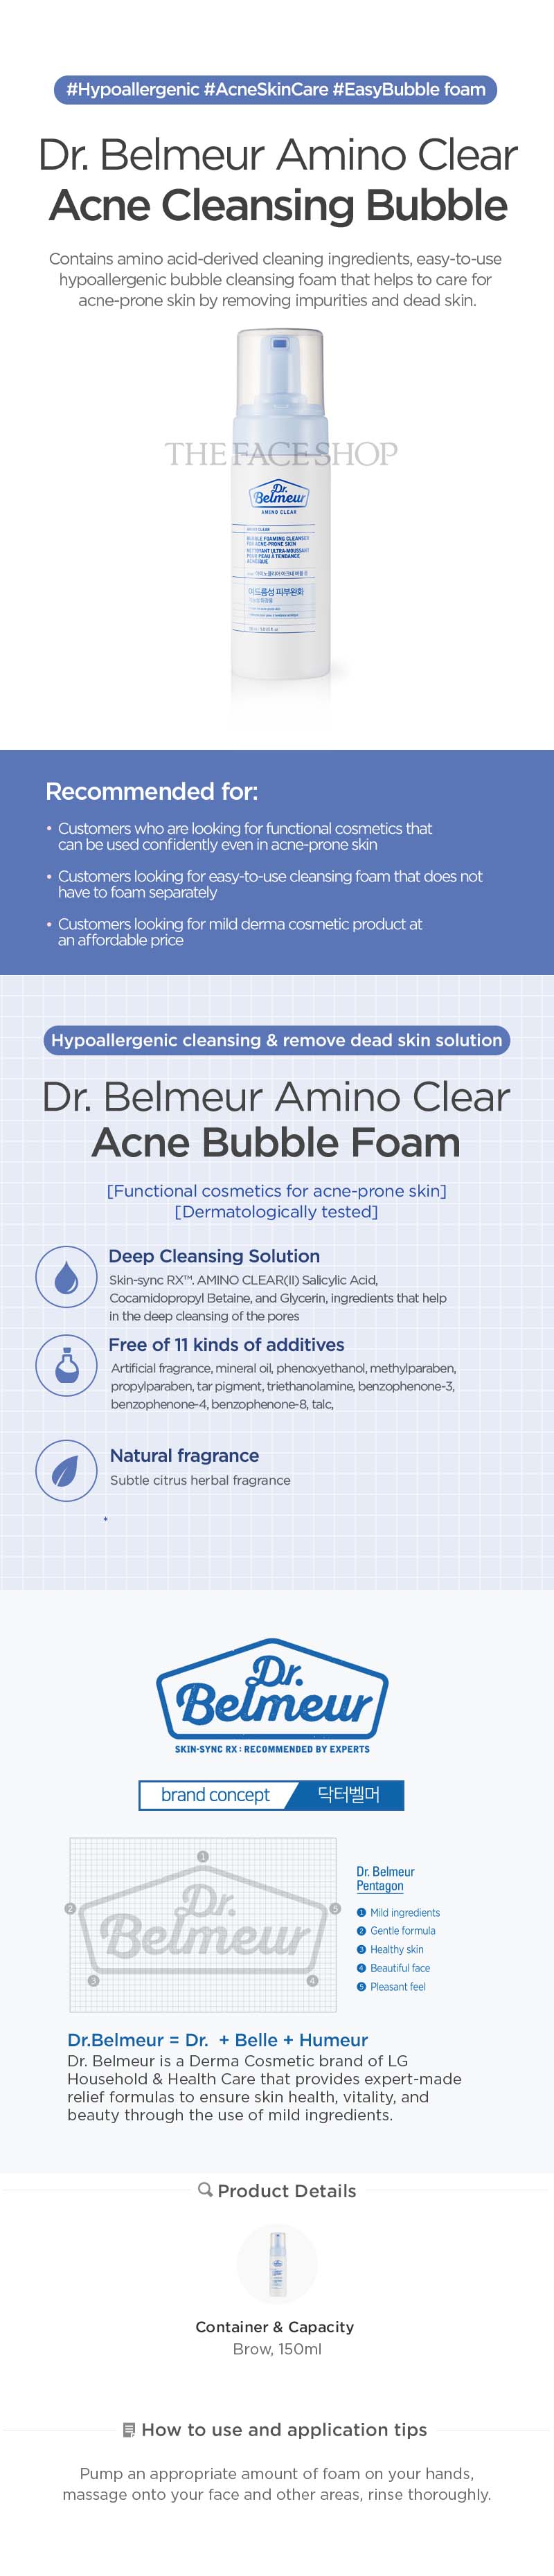 Dr Belmeur Amino Clear Bubble Foaming Cleanser for Acne Prone Sk